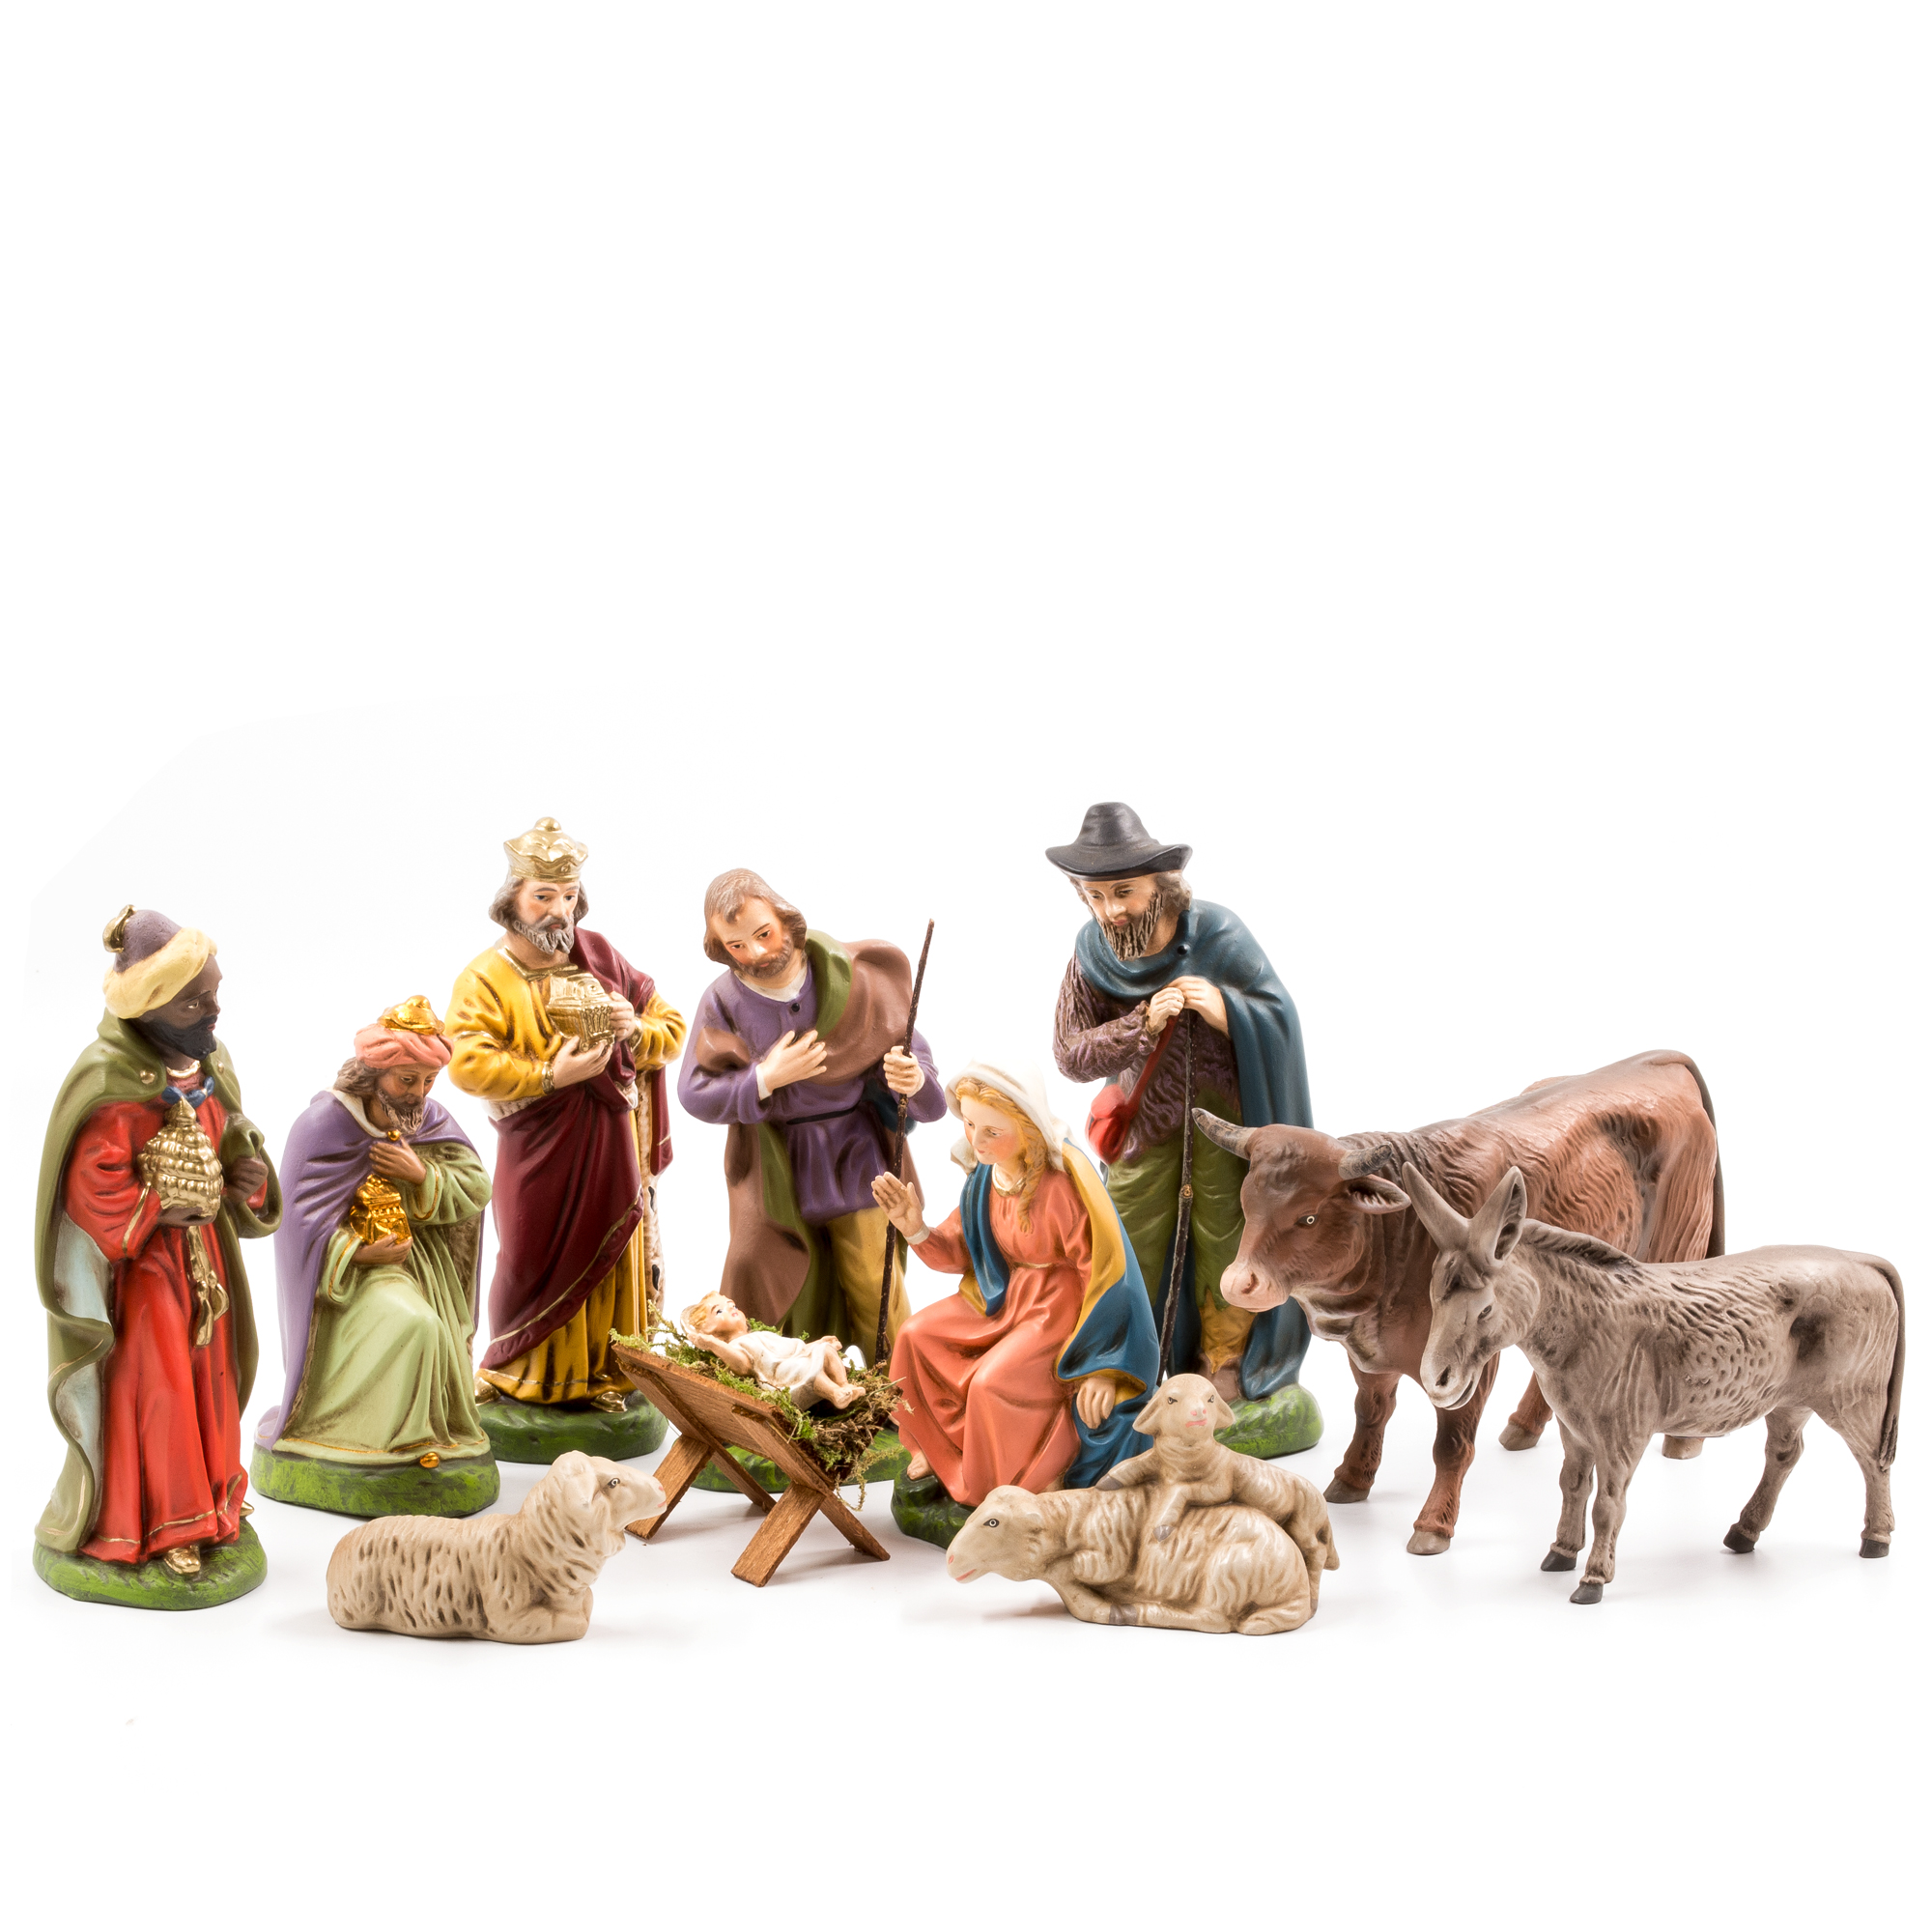 Nativity set, 11 figures, 5.75 inch size